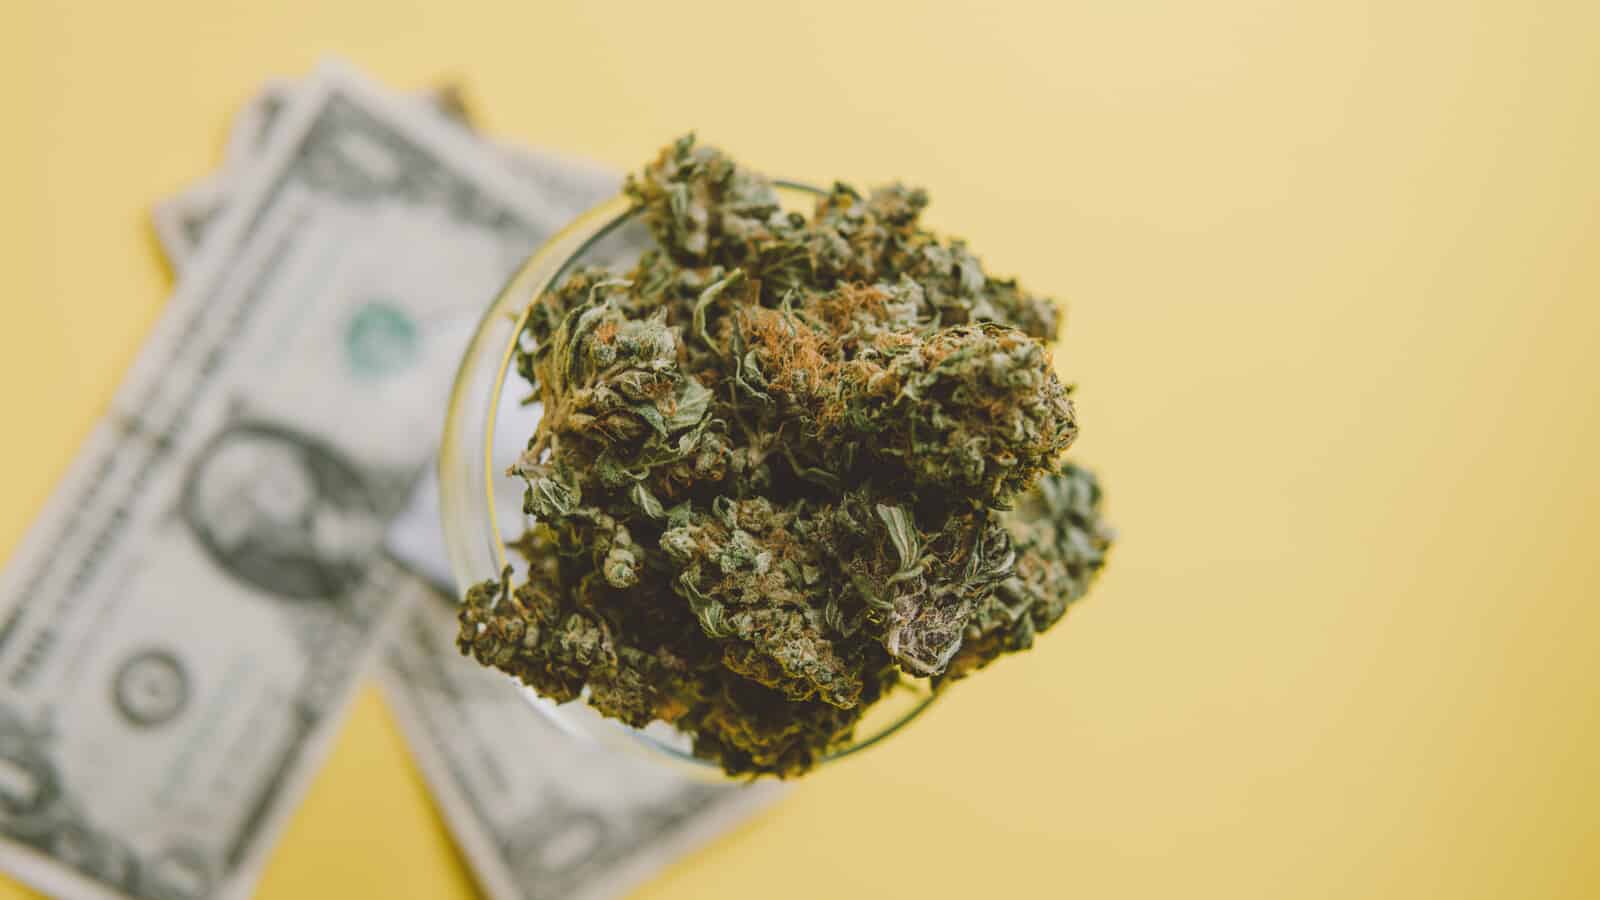 Cannabis bud on top of dollar bills